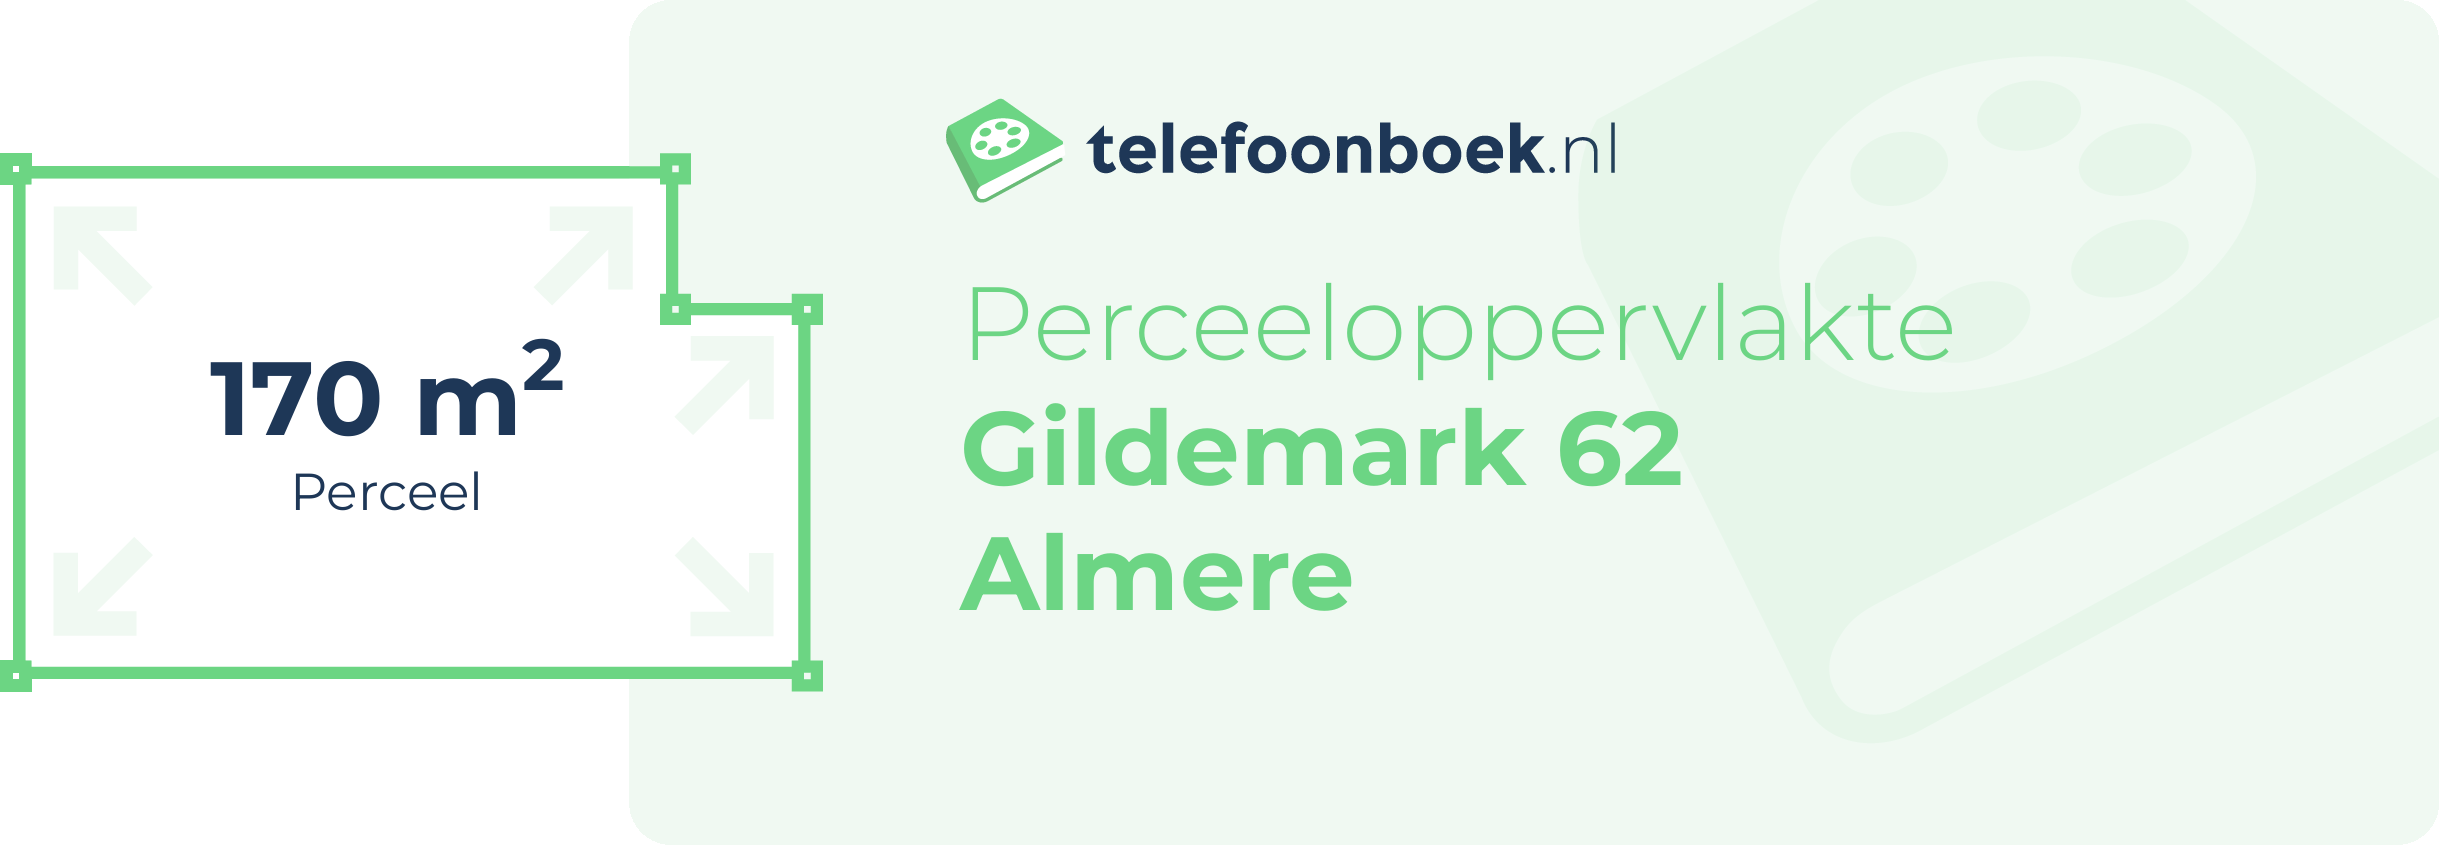 Perceeloppervlakte Gildemark 62 Almere